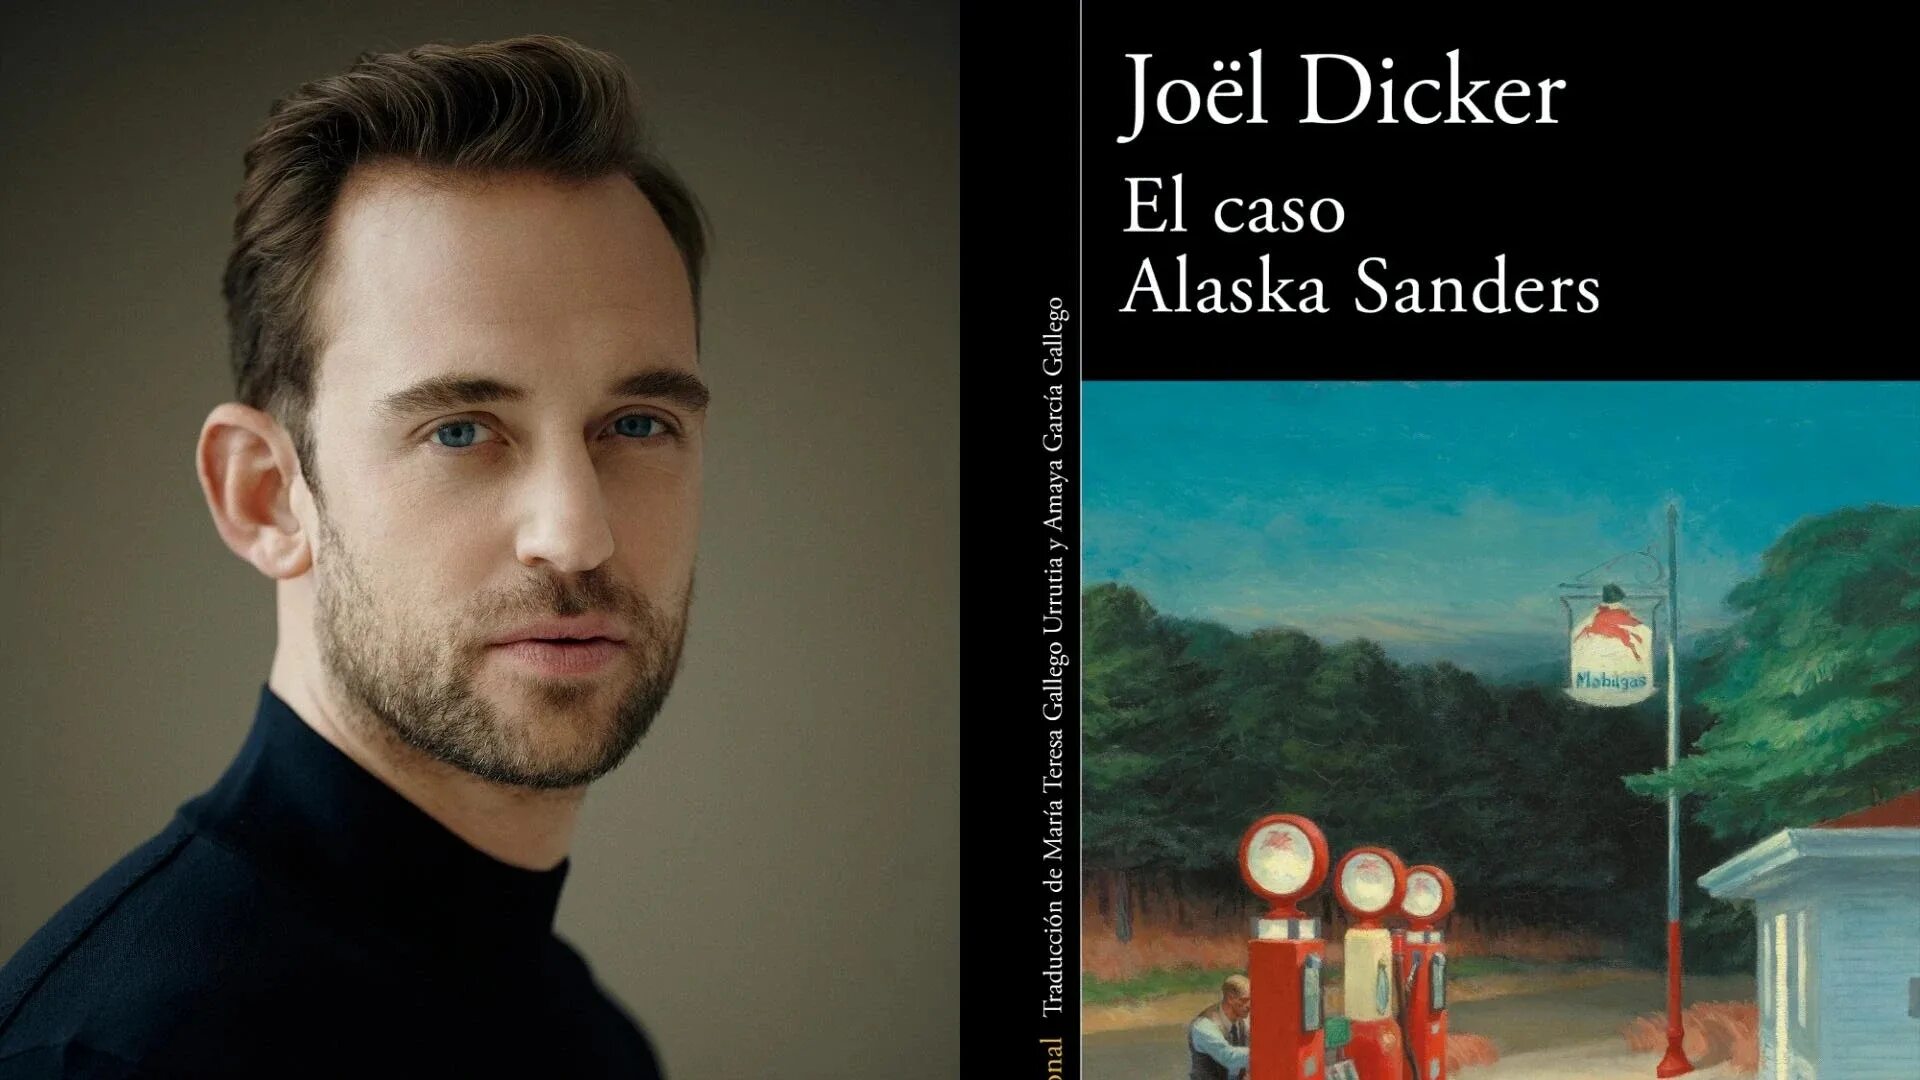 Диккер дело аляска сандерс. Жоэль Диккер. Аляска Сандерса. Дело Аляски Сандерс. “The Case of Alaska Sanders” by Joël dicker Cover.